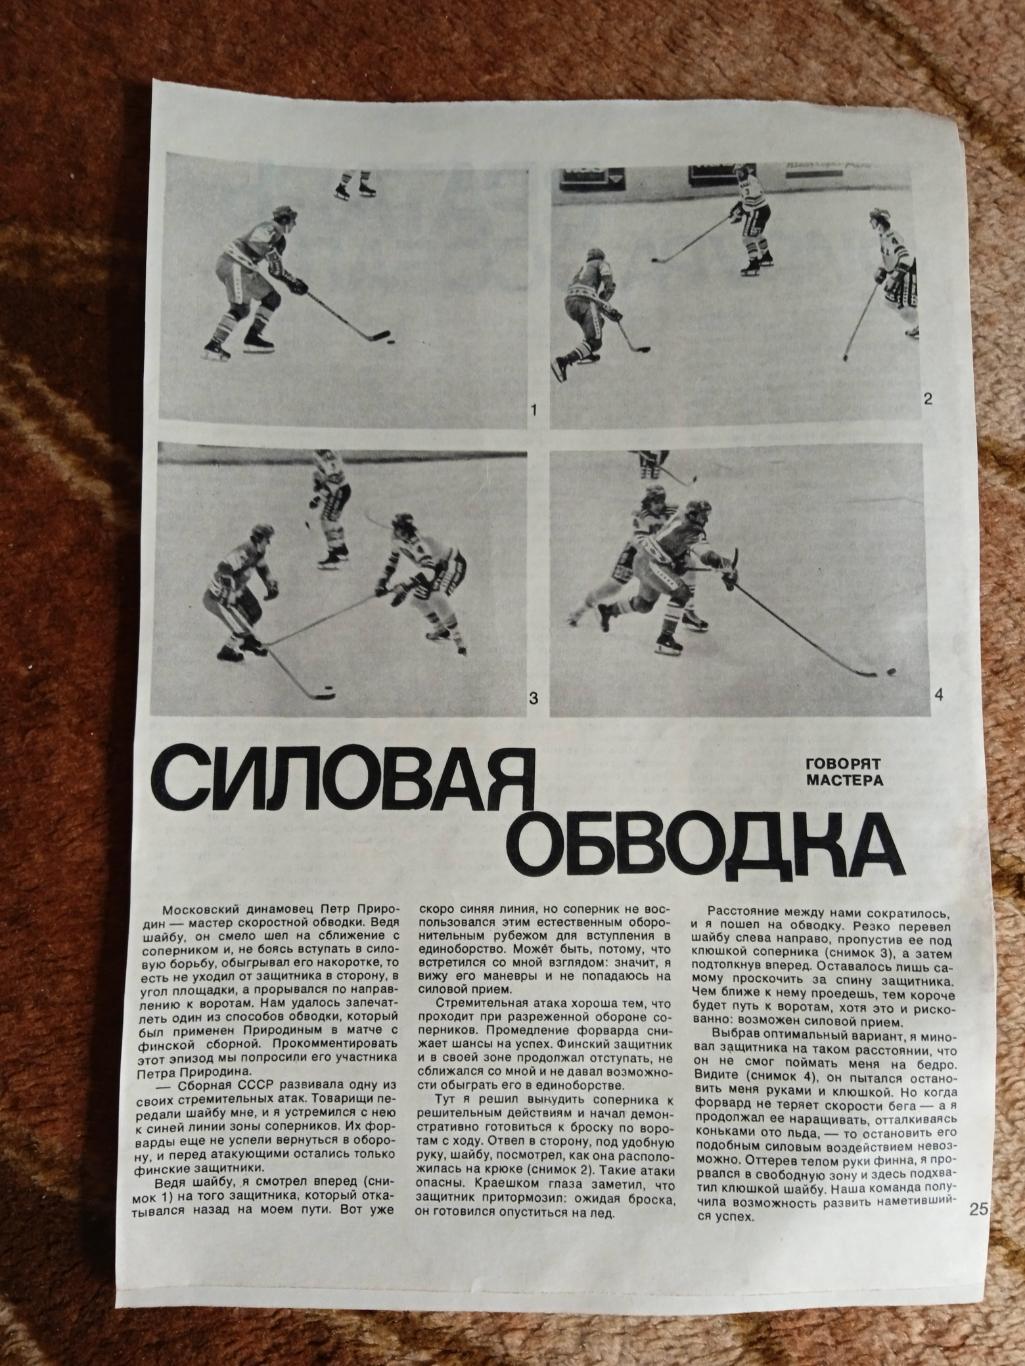 Статья.Фото.Хоккей (П.Природин-Динамо Москва),хоккей с мячом.СИ 1978.